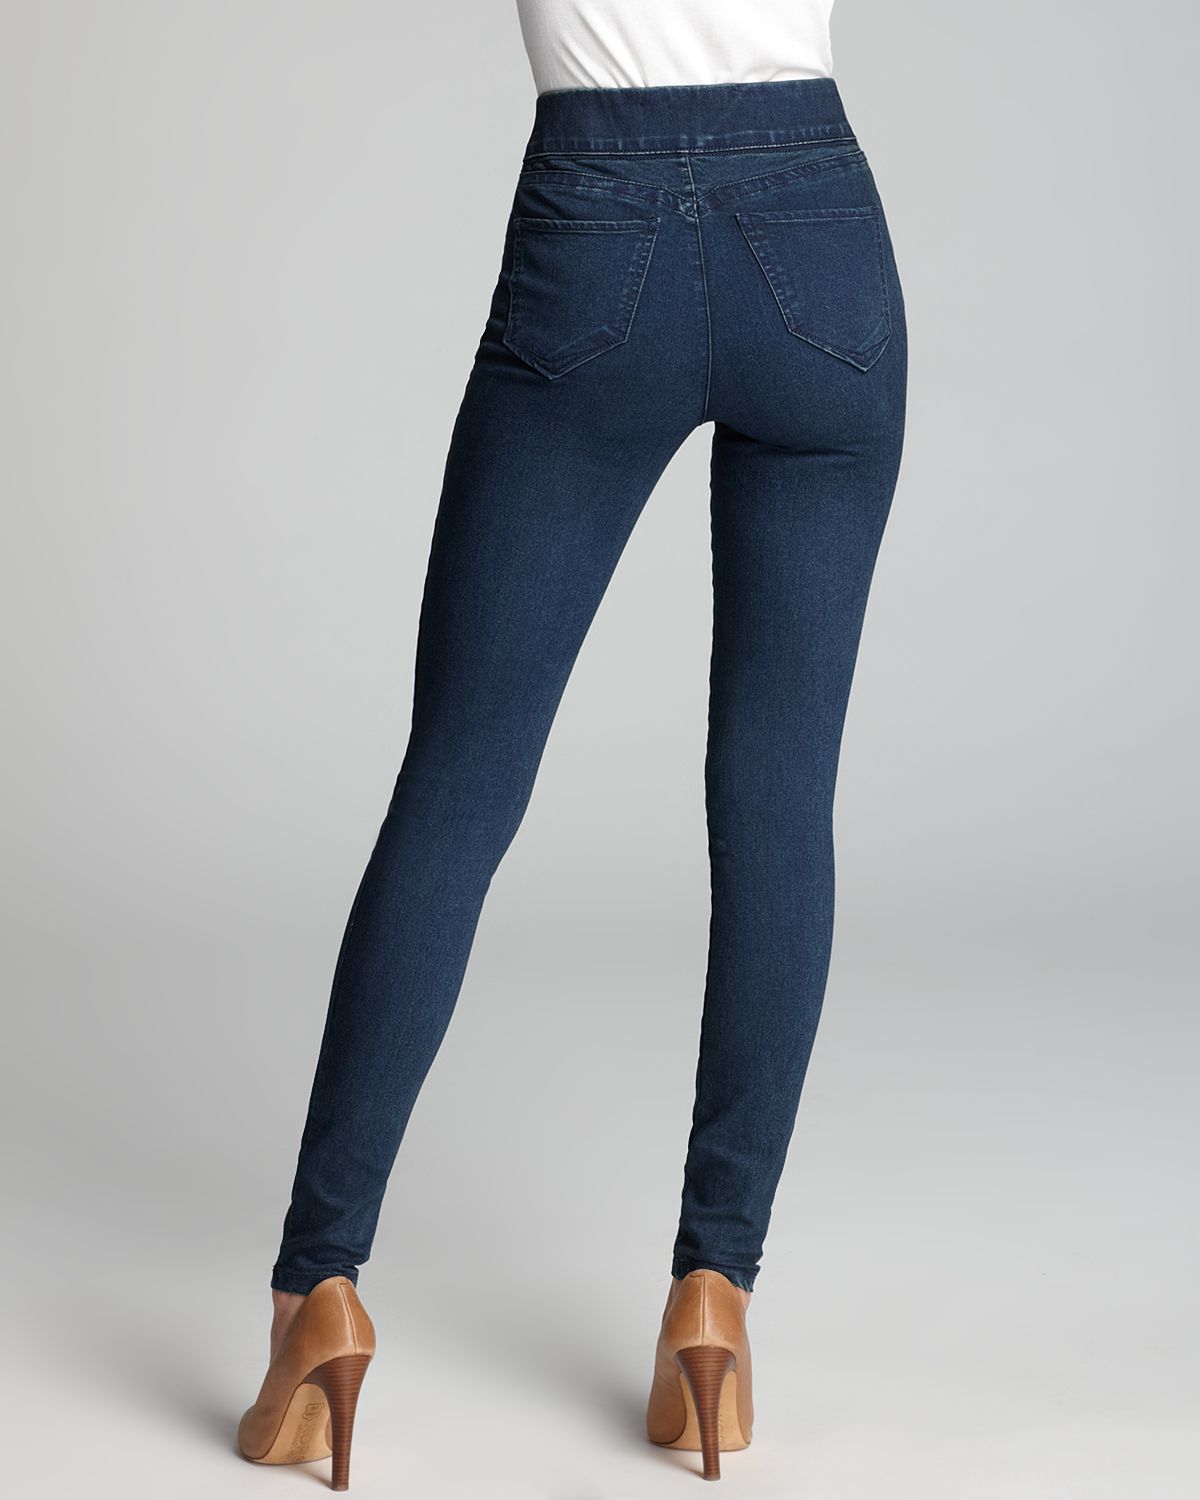 https://cdna.lystit.com/photos/2013/10/13/yummie-tummie-worn-jean-leggings-stretch-denim-product-2-14092918-382461484.jpeg